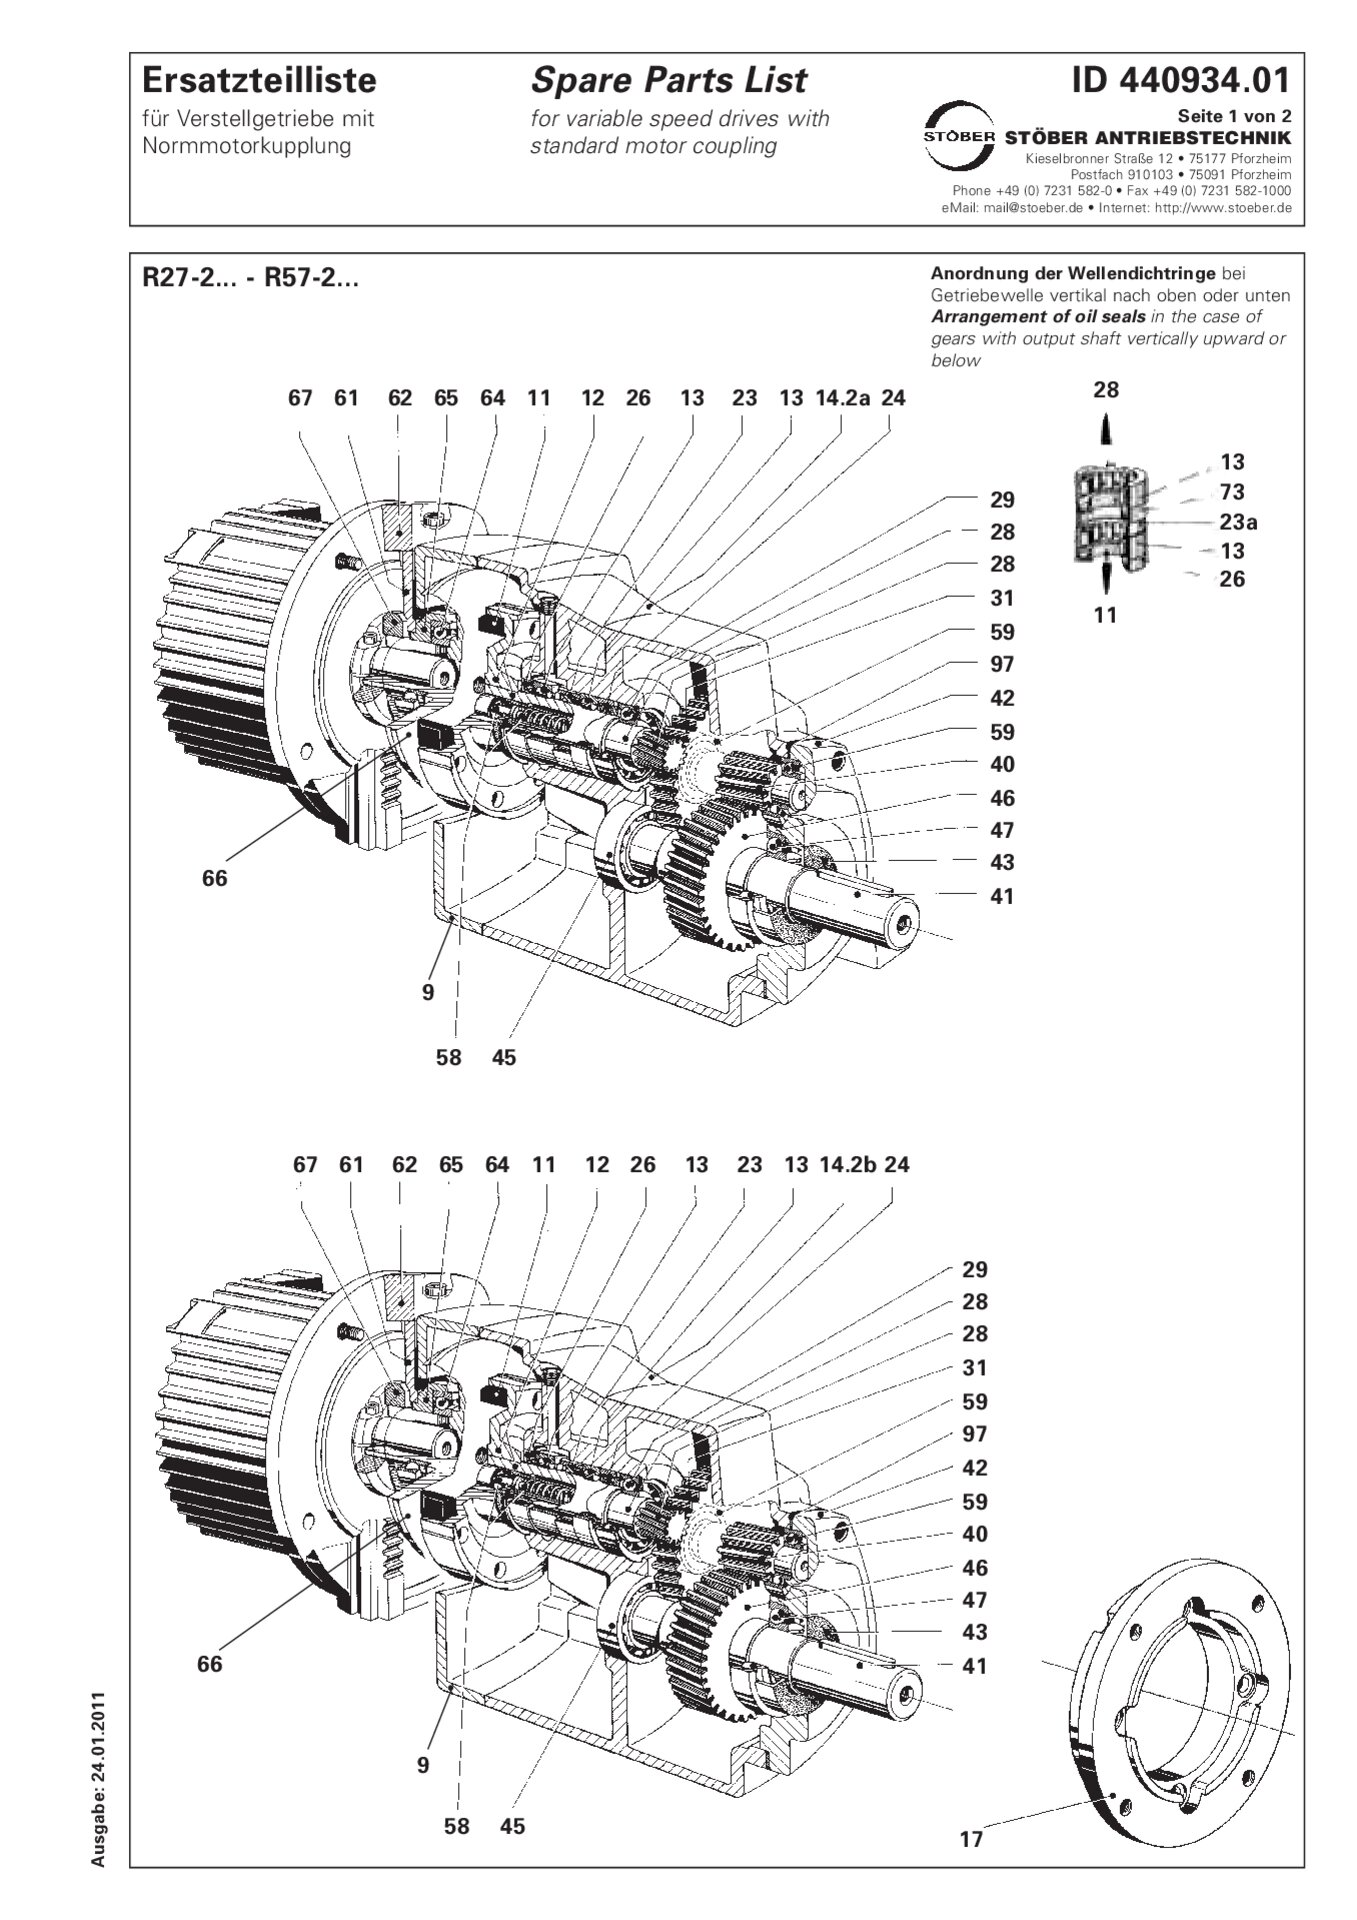 Ersatzteilliste R27-2/R37-2/R47-2/R57-2 mit NormmotorkupplungListe des pièces de rechange R27-2/R37-2/R47-2/R57-2 avec accouplement de moteur standardListino dei pezzi di ricambio R27-2/R37-2/R47-2/R57-2 con accoppiamento motore standardSpare parts list R27-2/R37-2/R47-2/R57-2 with standard motor coupling